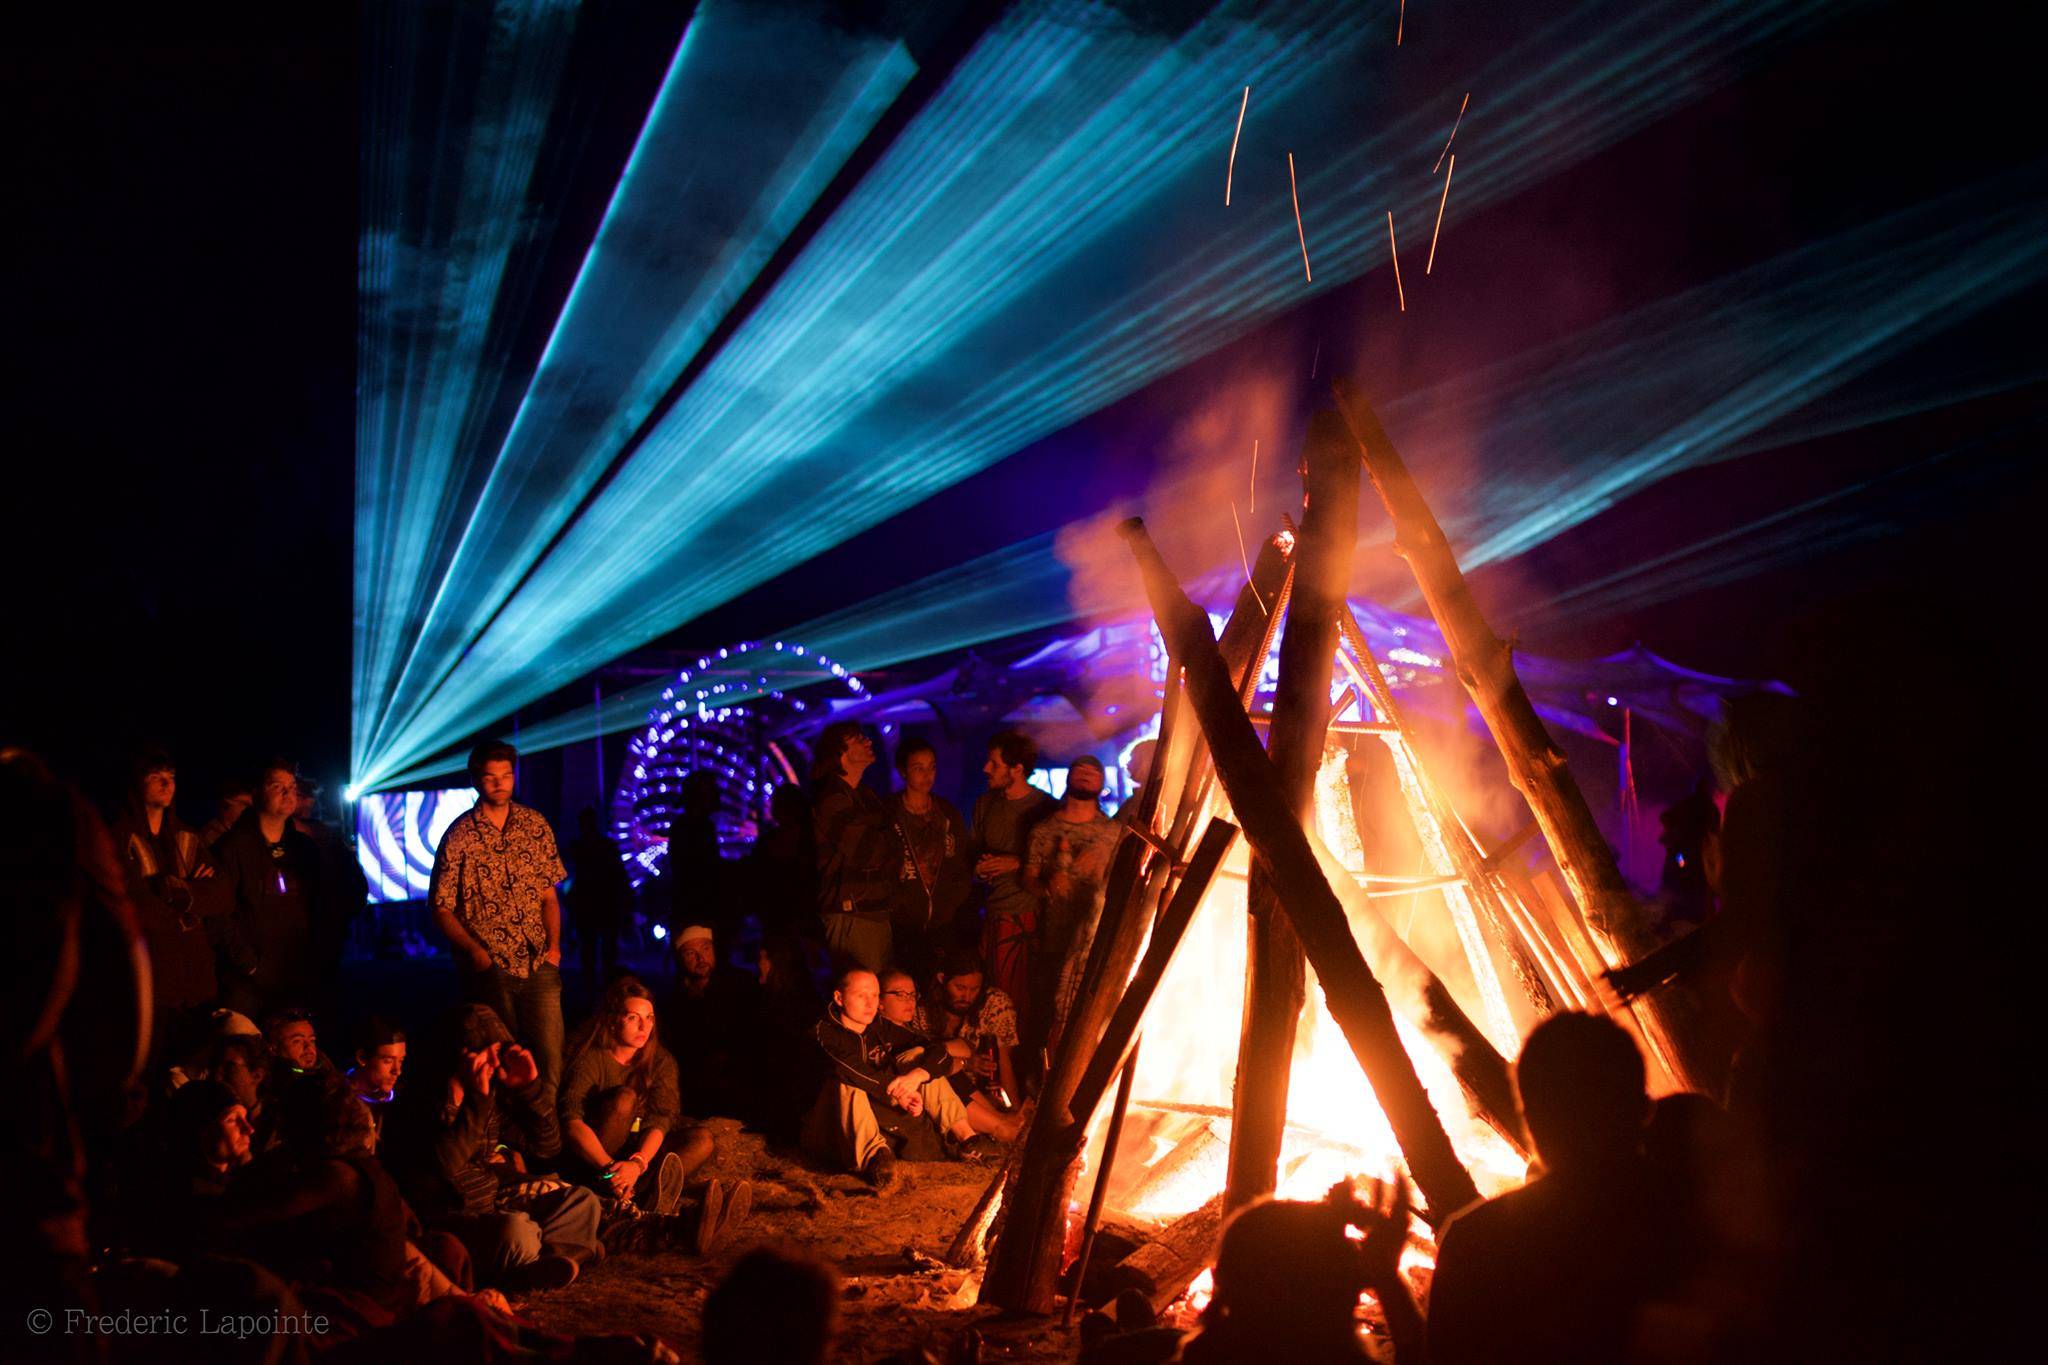 Eclipse festival 2016 gathering around fire